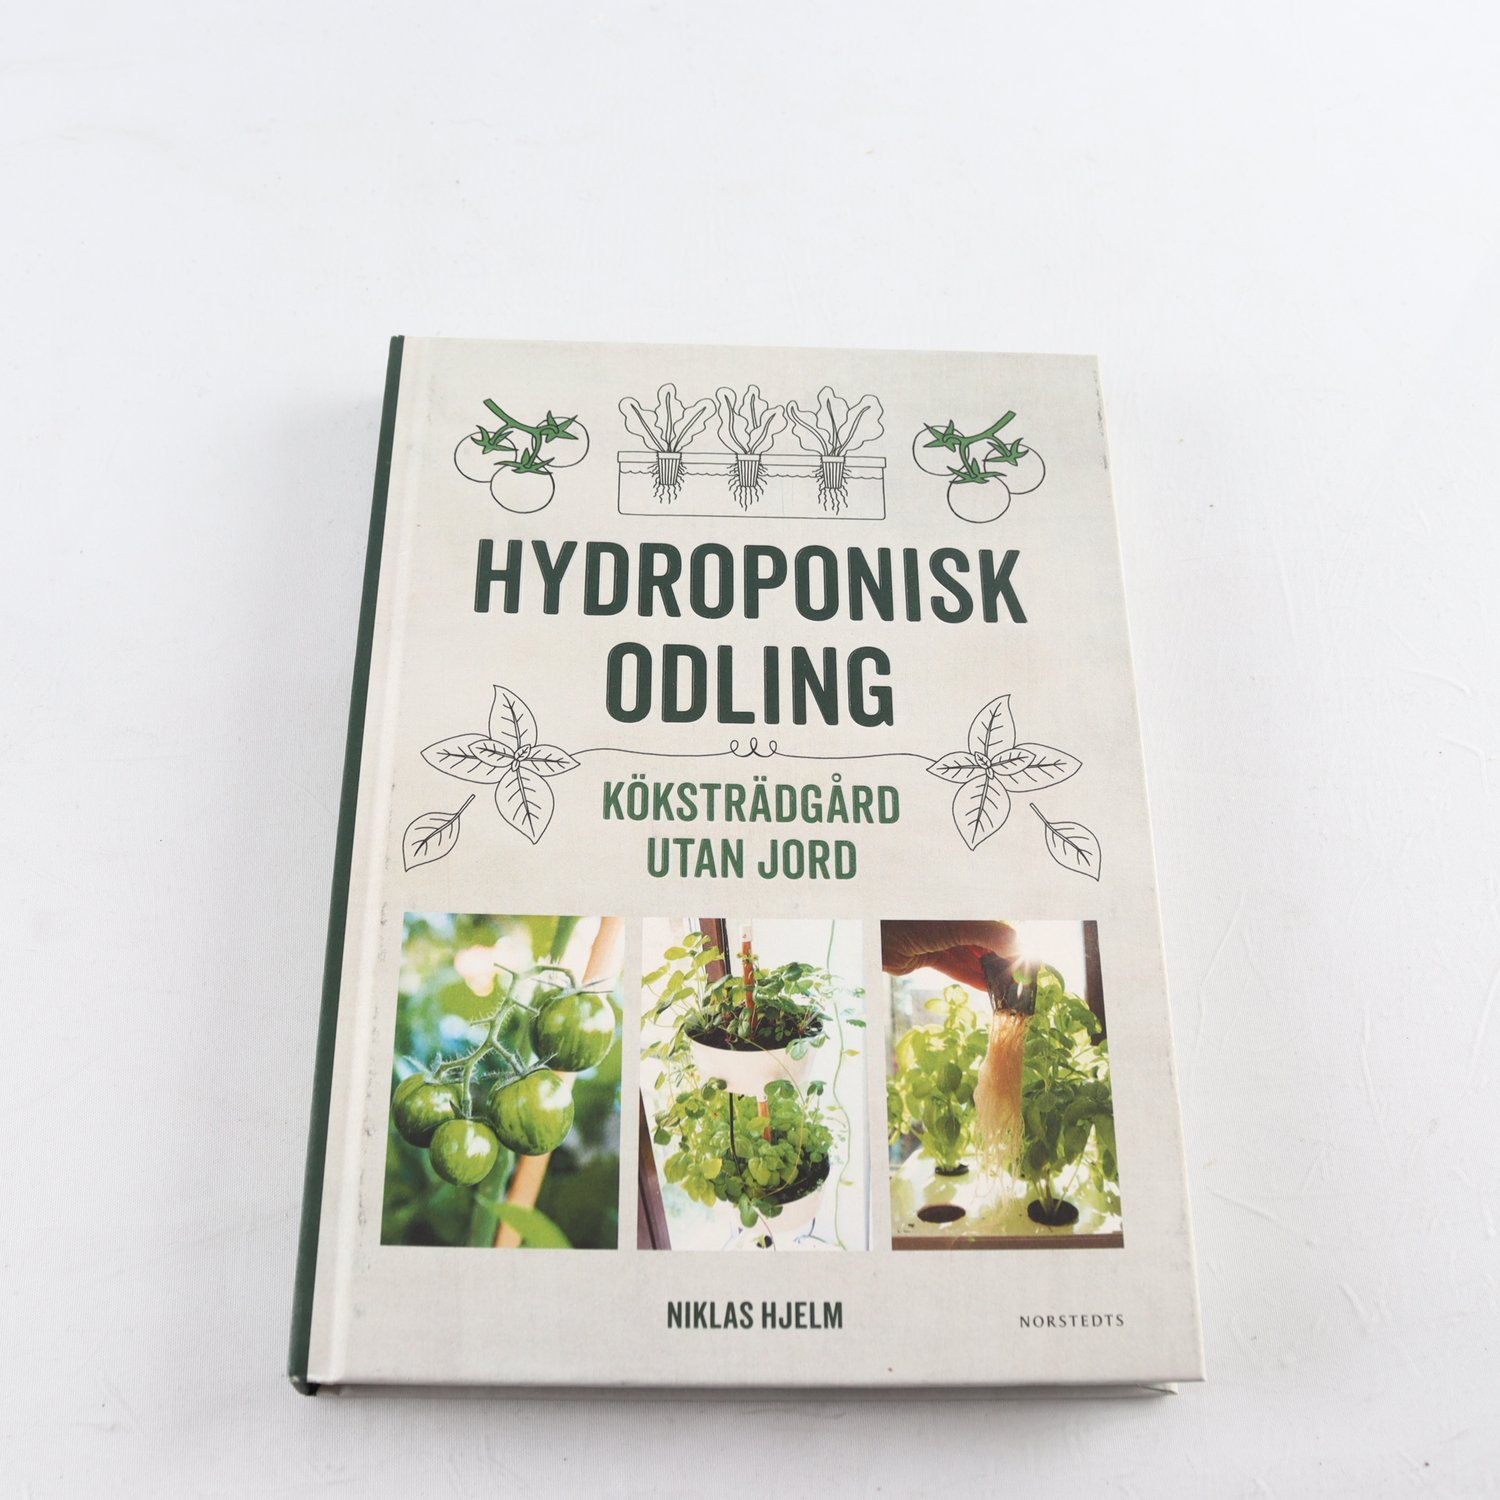 Hydroponisk odling: Köksträdgård utan jord, Niklas Hjelm